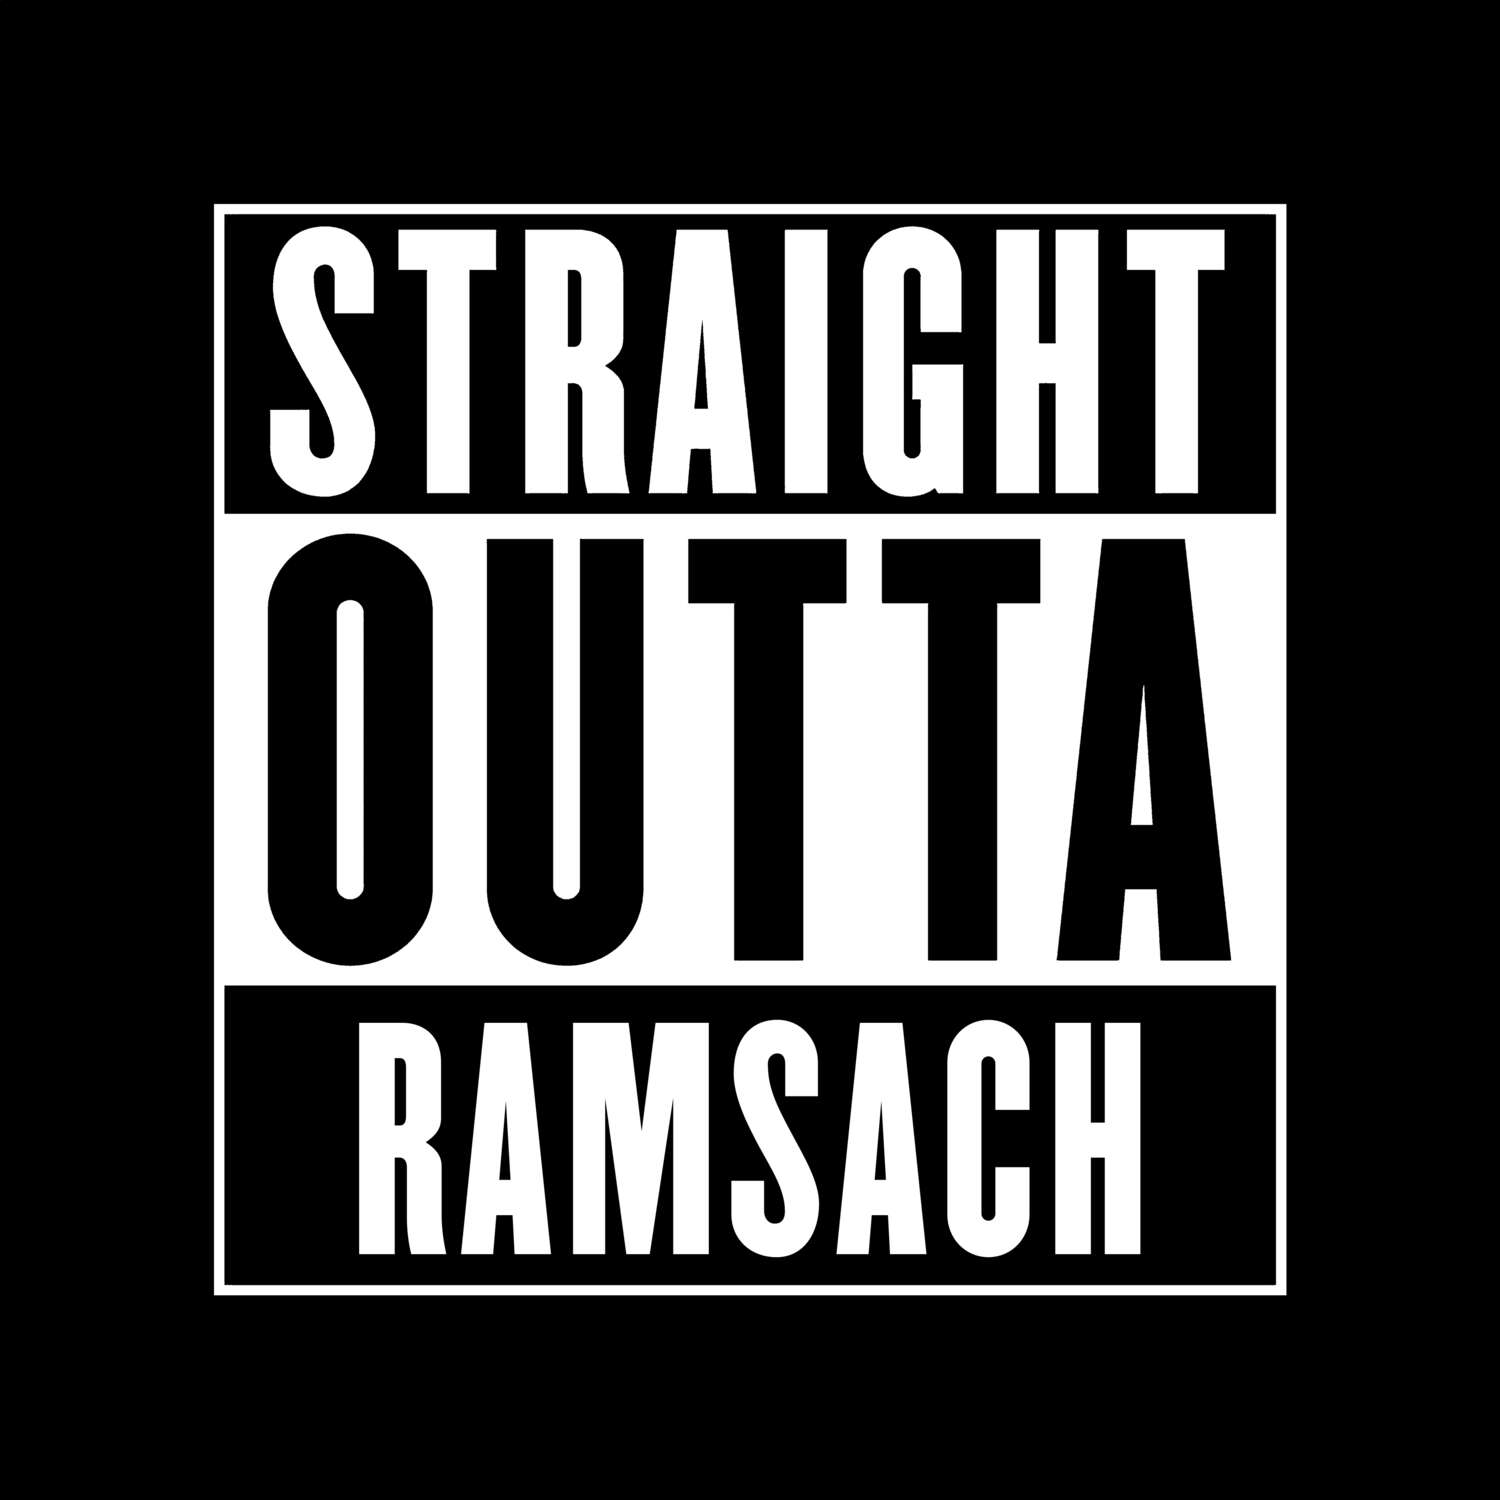 Ramsach T-Shirt »Straight Outta«